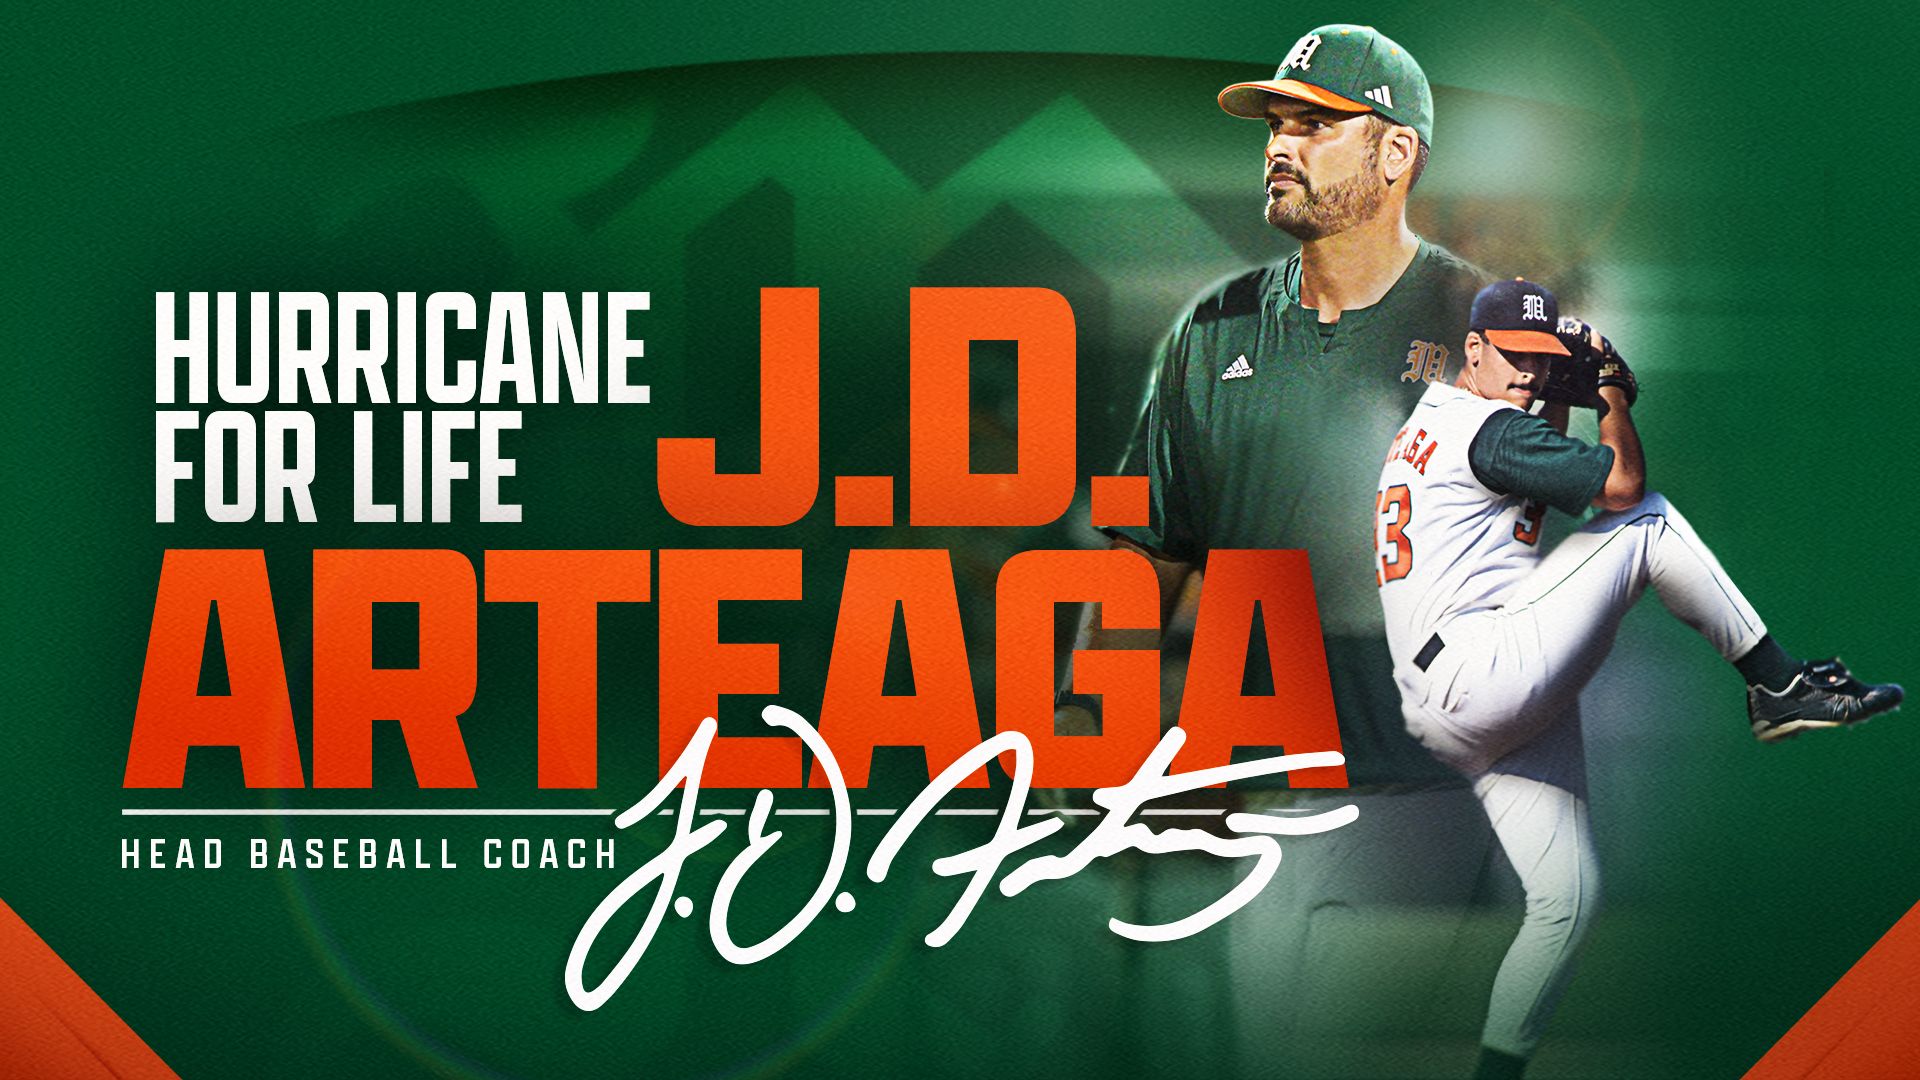 University of Miami Hires J.D. Arteaga as Head Baseball Coach